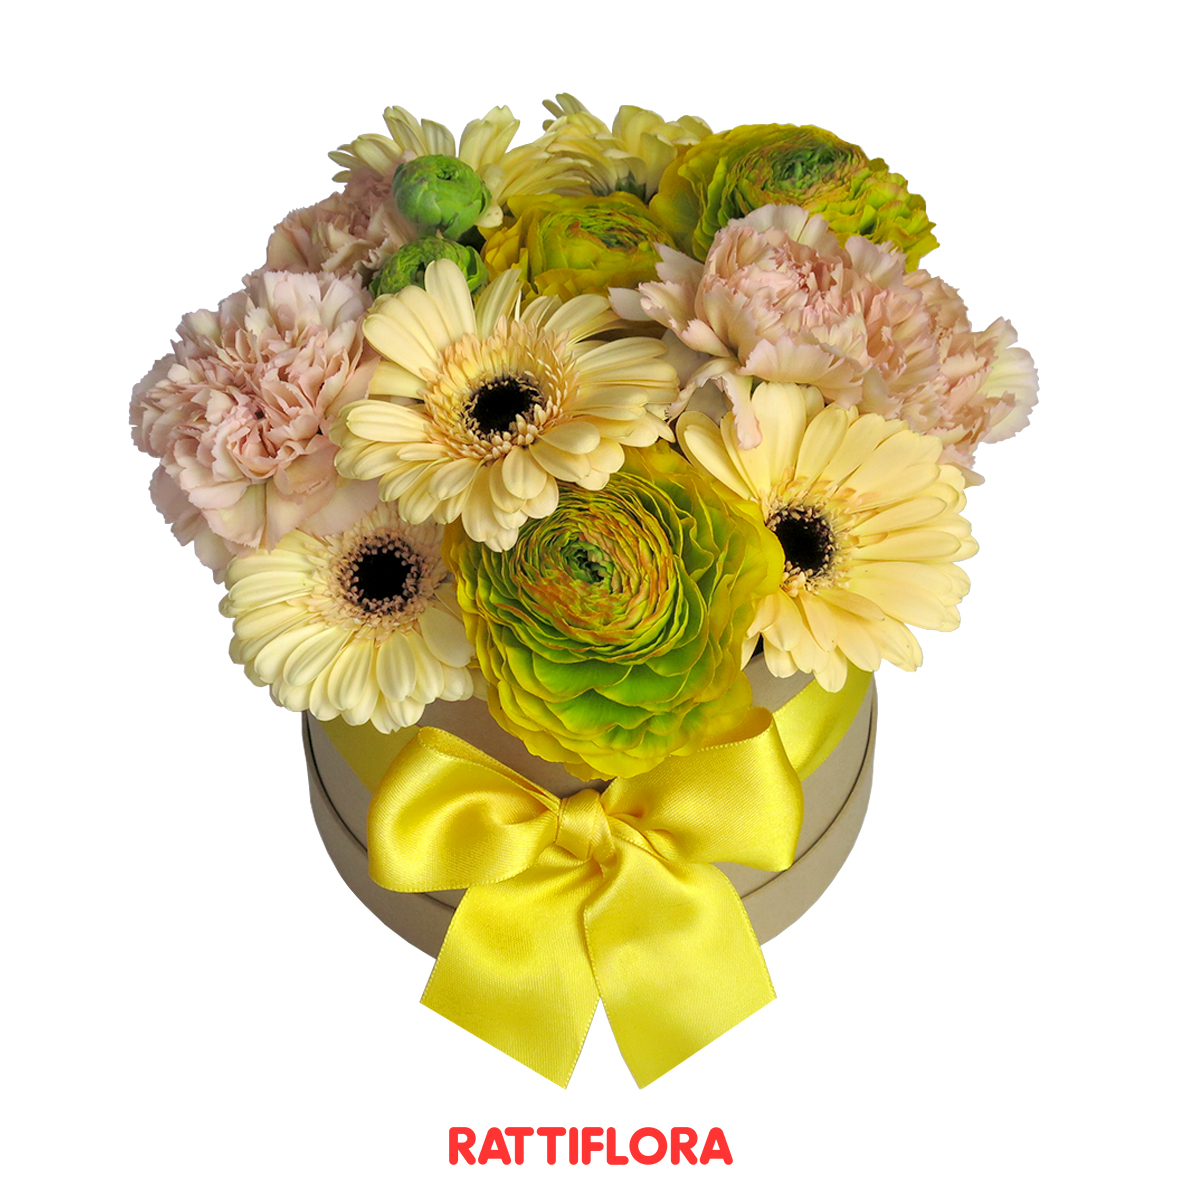 Softly Florabox - Rattiflora